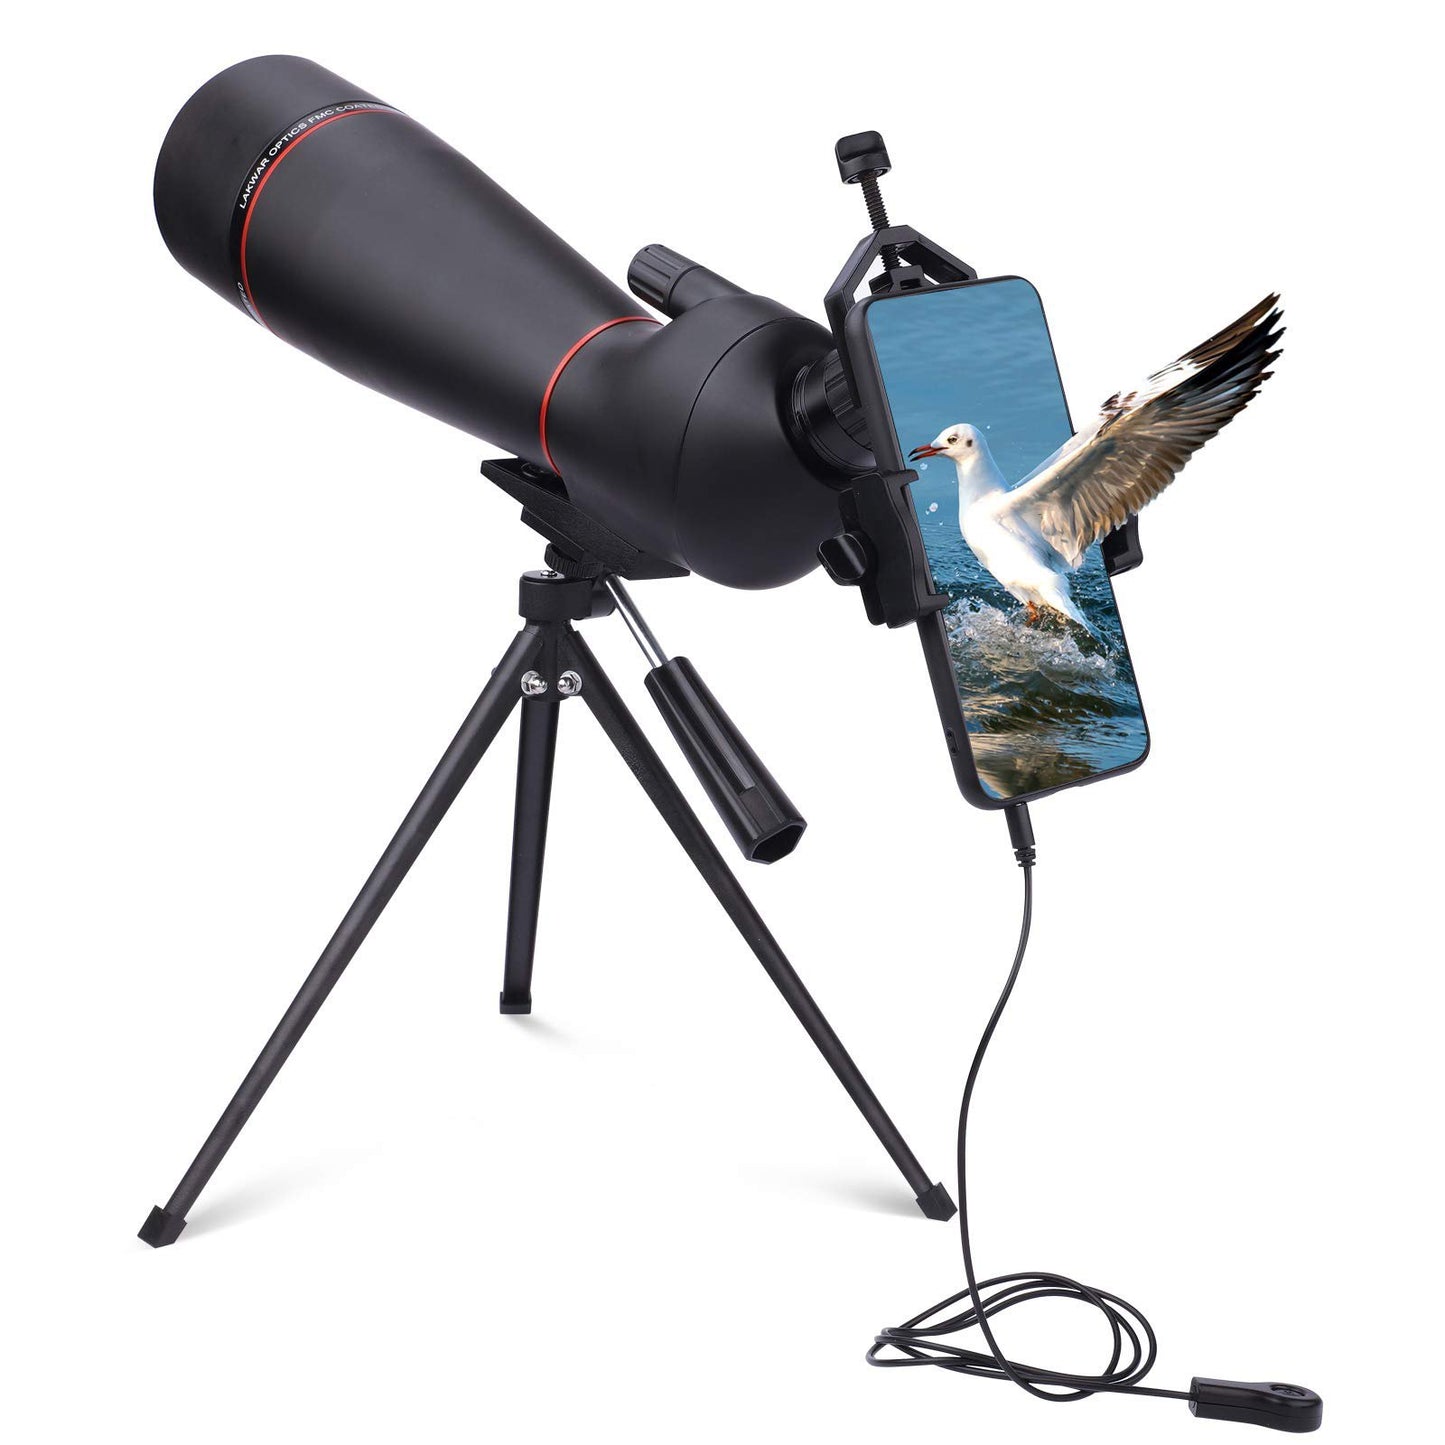 LAKWAR 20-60x80mm HD Spotting Scope for Bird Watching, Monocular Telescope BAK4 45-Degree Angled Eyepiece with Carrying Bag,Phone Photo Mount for Hunting Target Shooting Wildlife Scenery